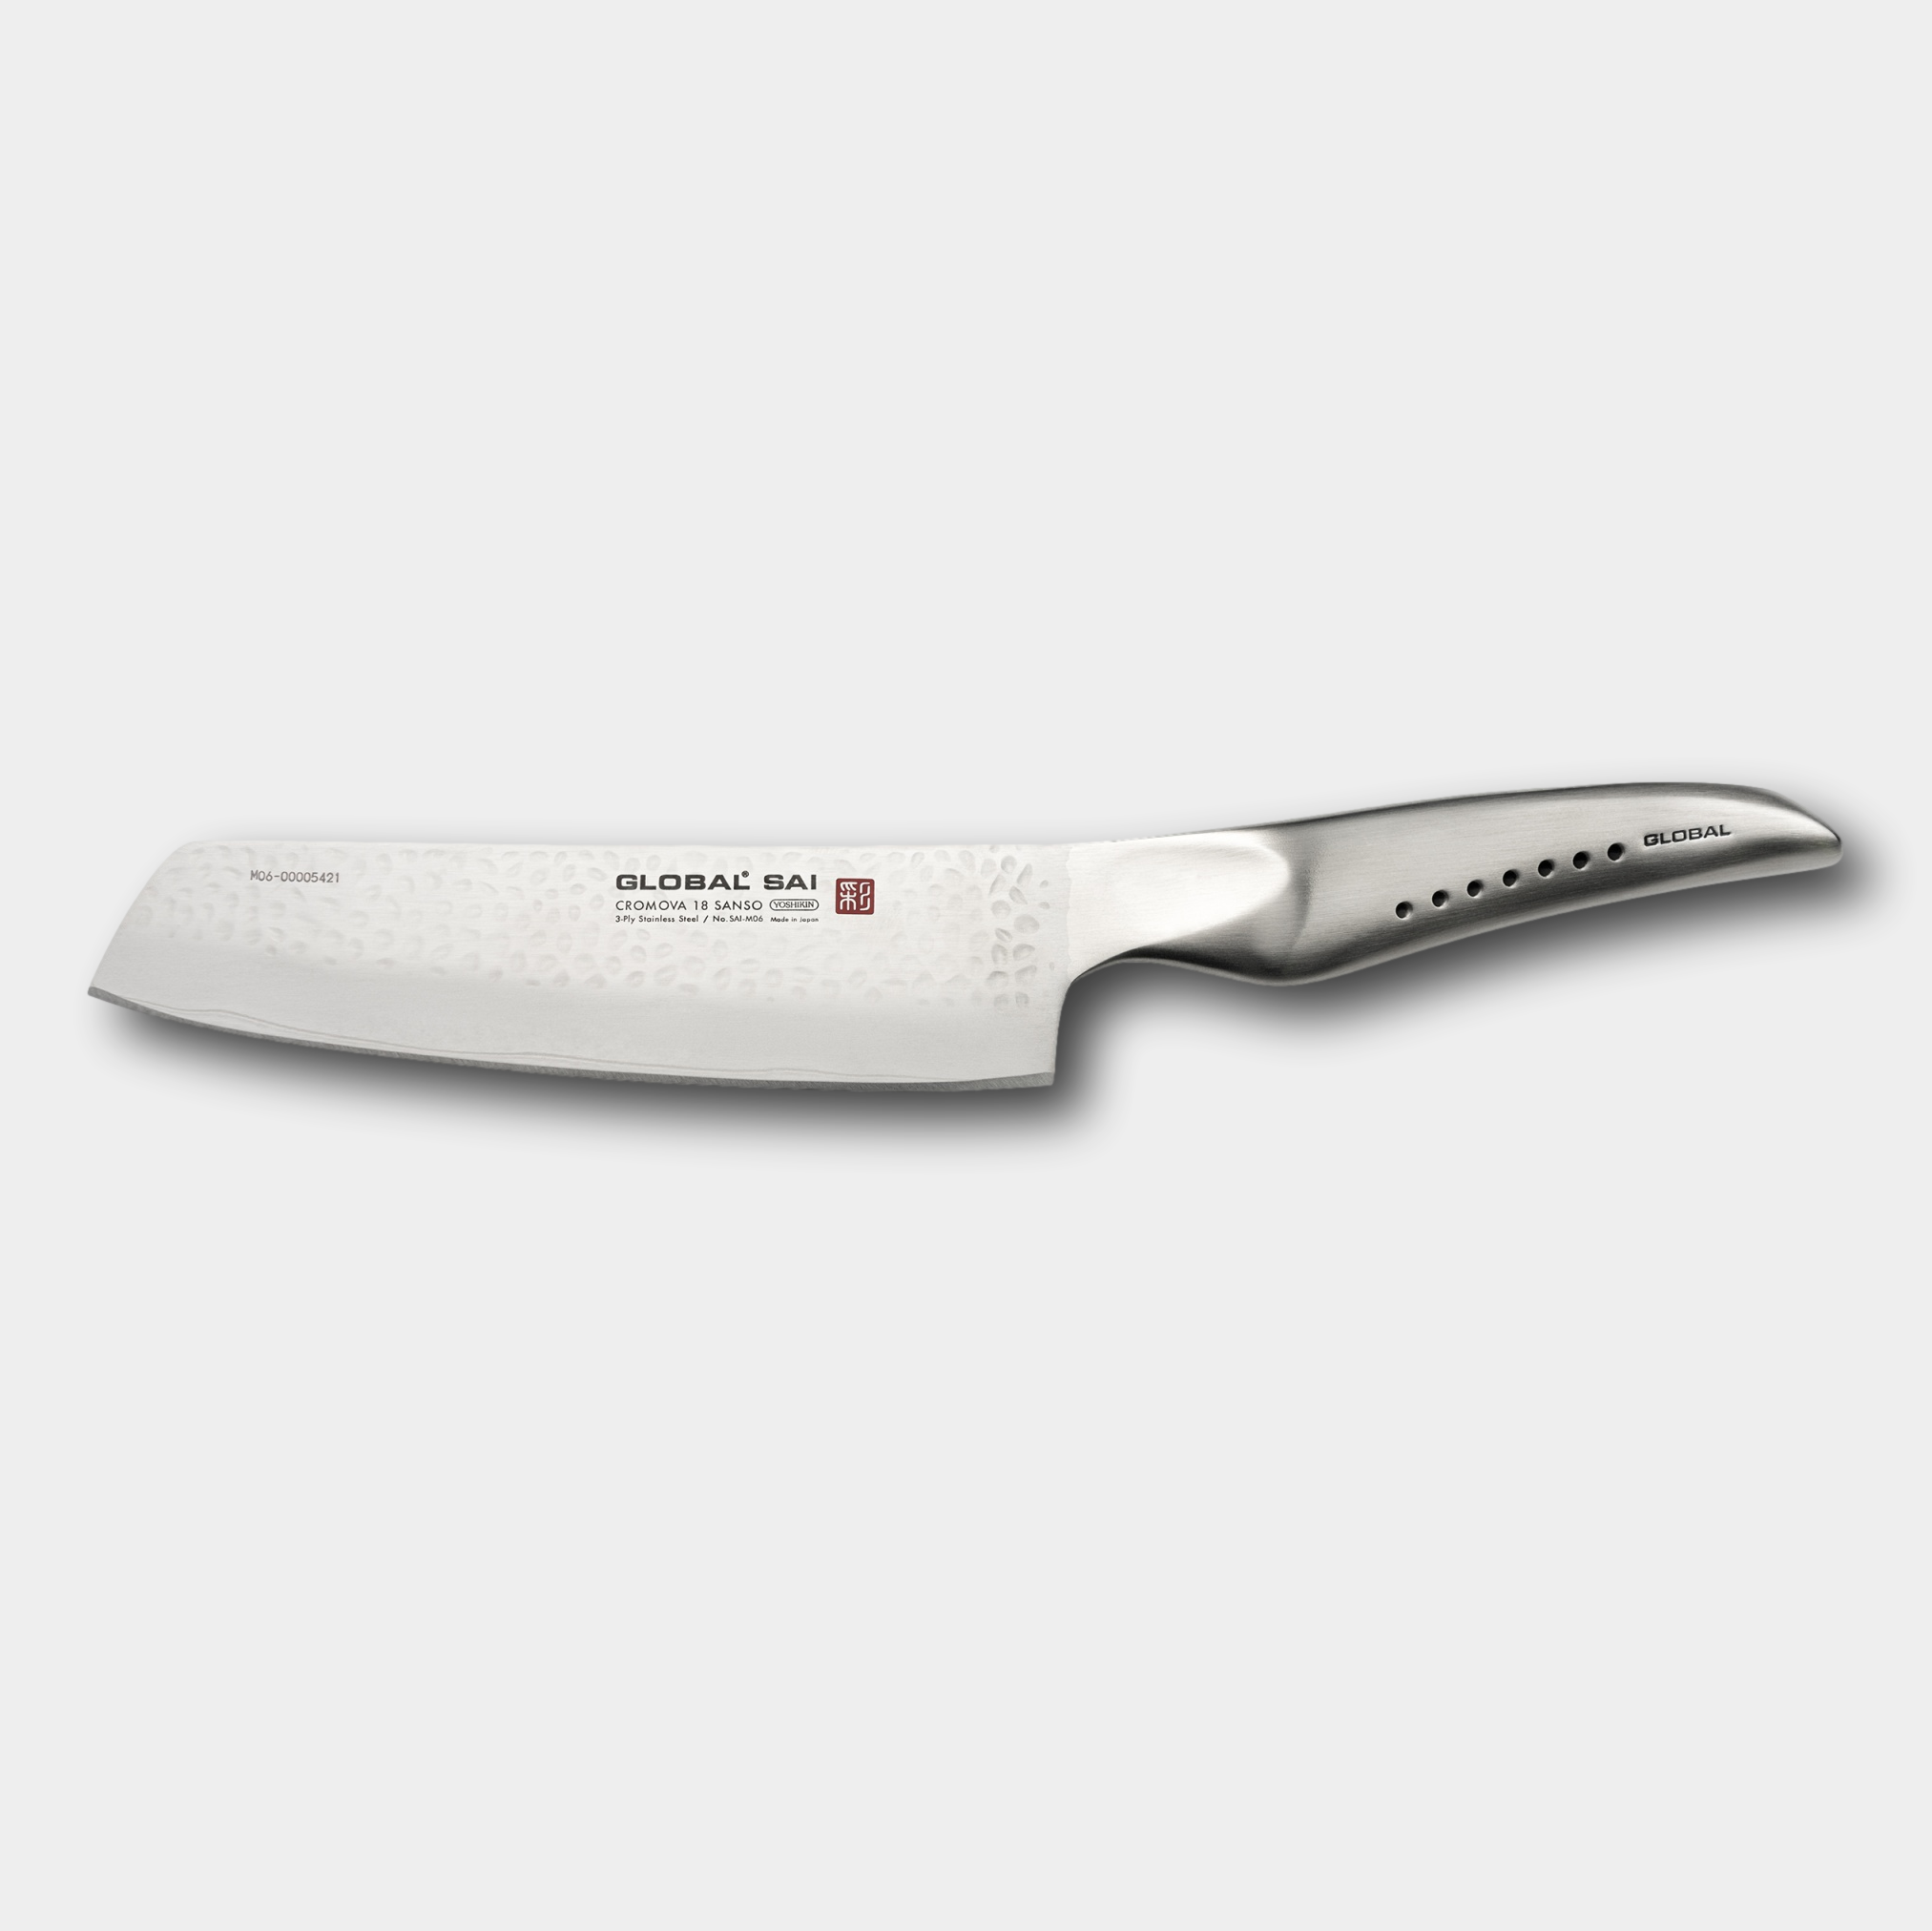 Global Sai Vegetable/Nakiri Knife 15cm